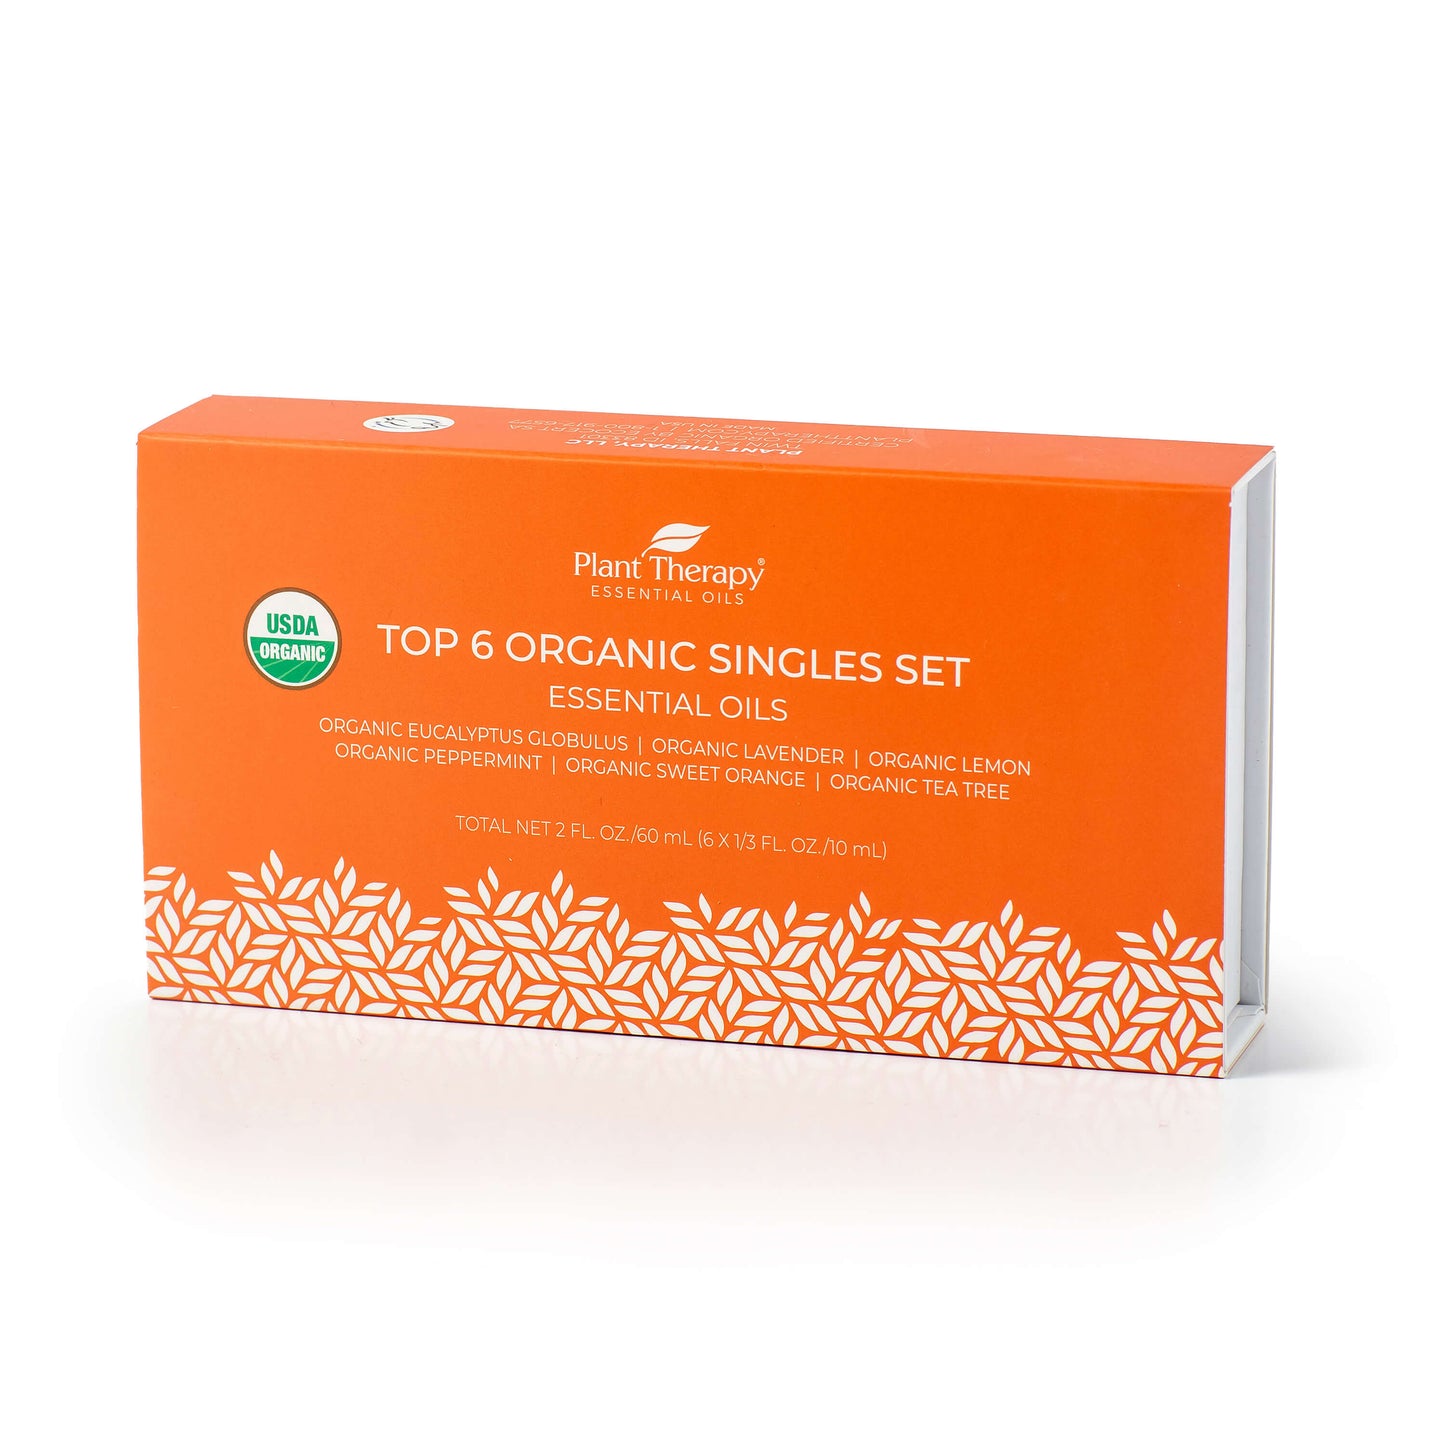 Top 6 Organic Singles Essential Oil Set box